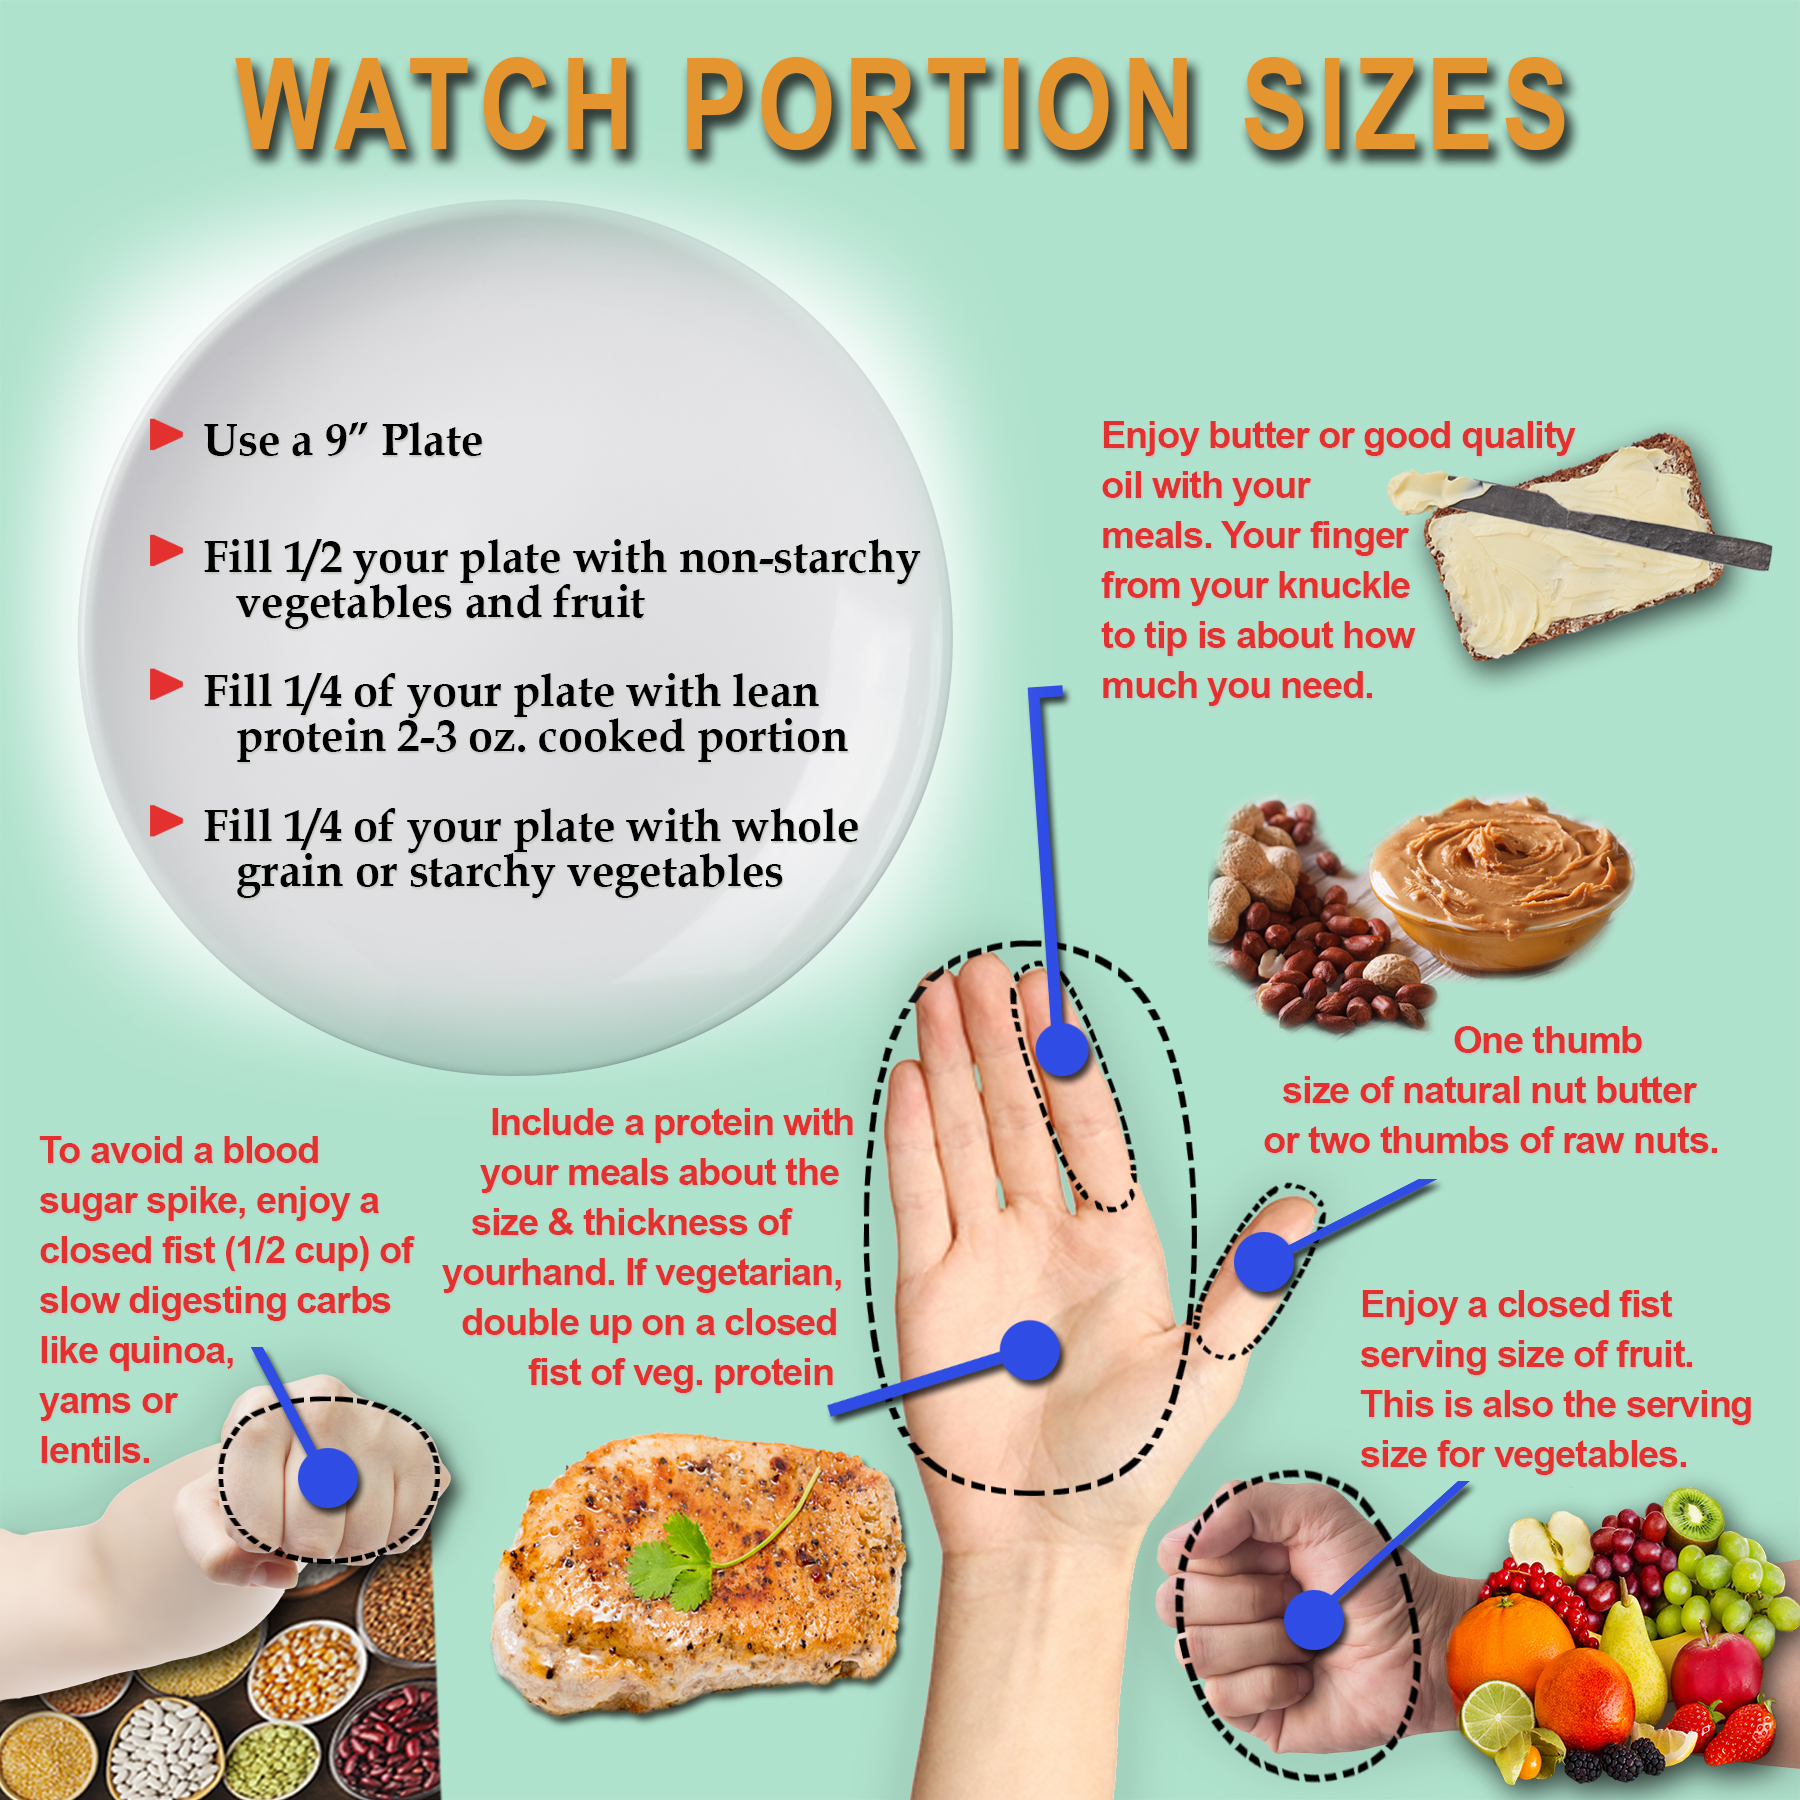 Shop Portion Fix - Practice Healthy Eating Habits